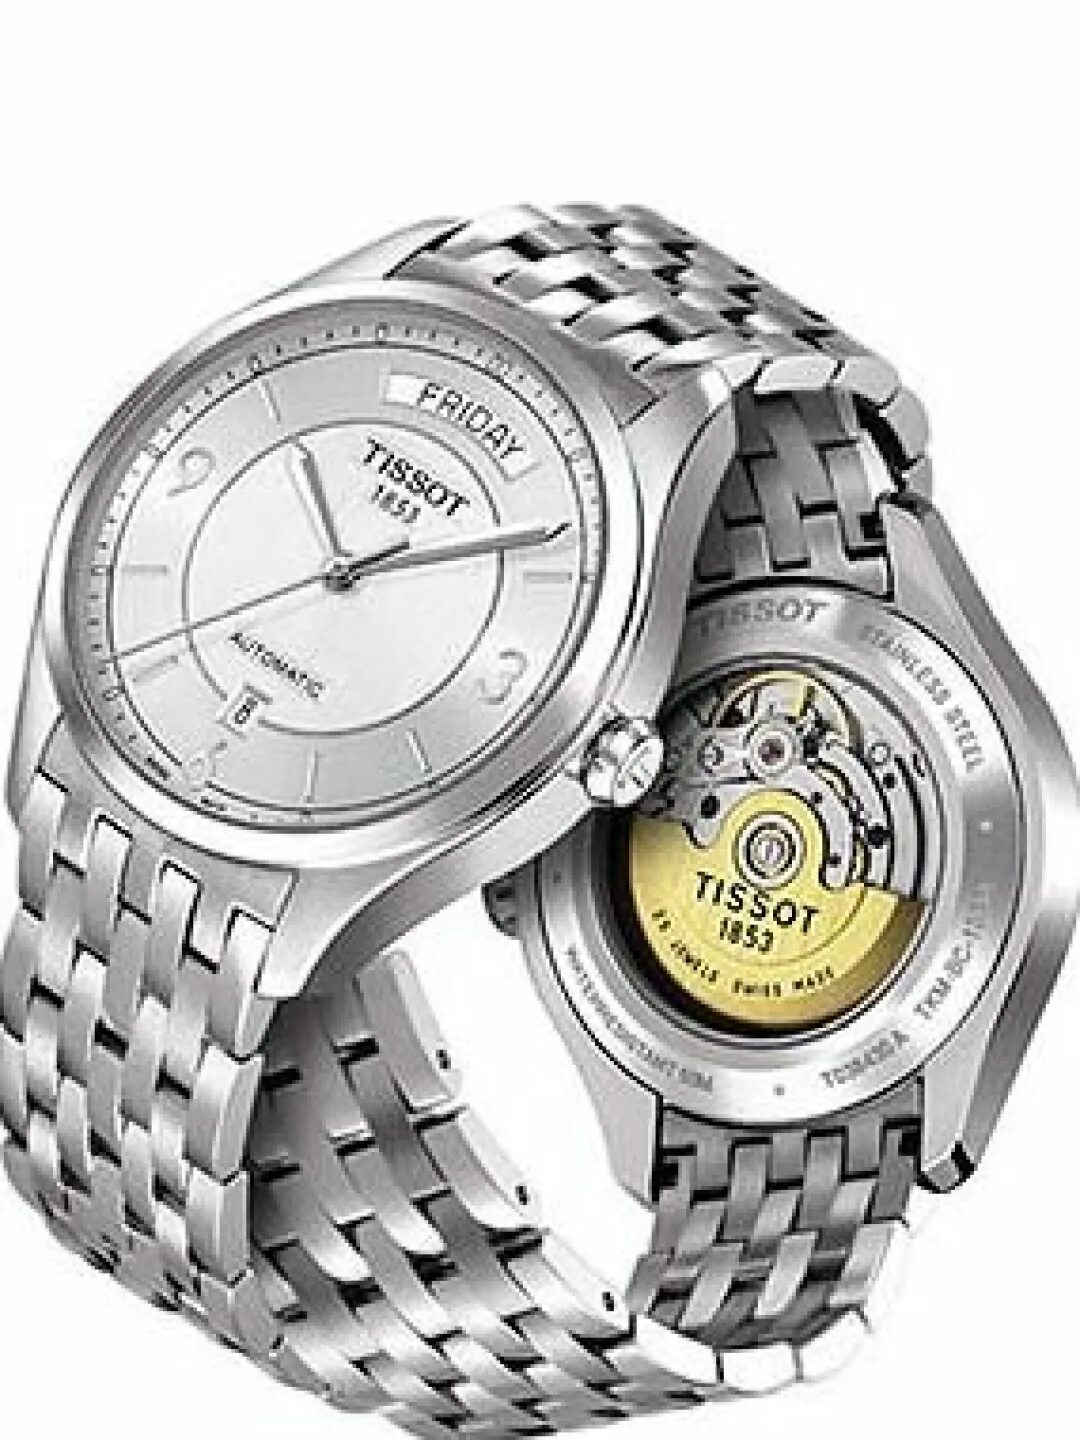 Швейцарские наручные часы тиссот. Tissot t038.430. Tissot t038430a. Часы Tissot Stainless Steel. Tissot Swiss watches since 1853.